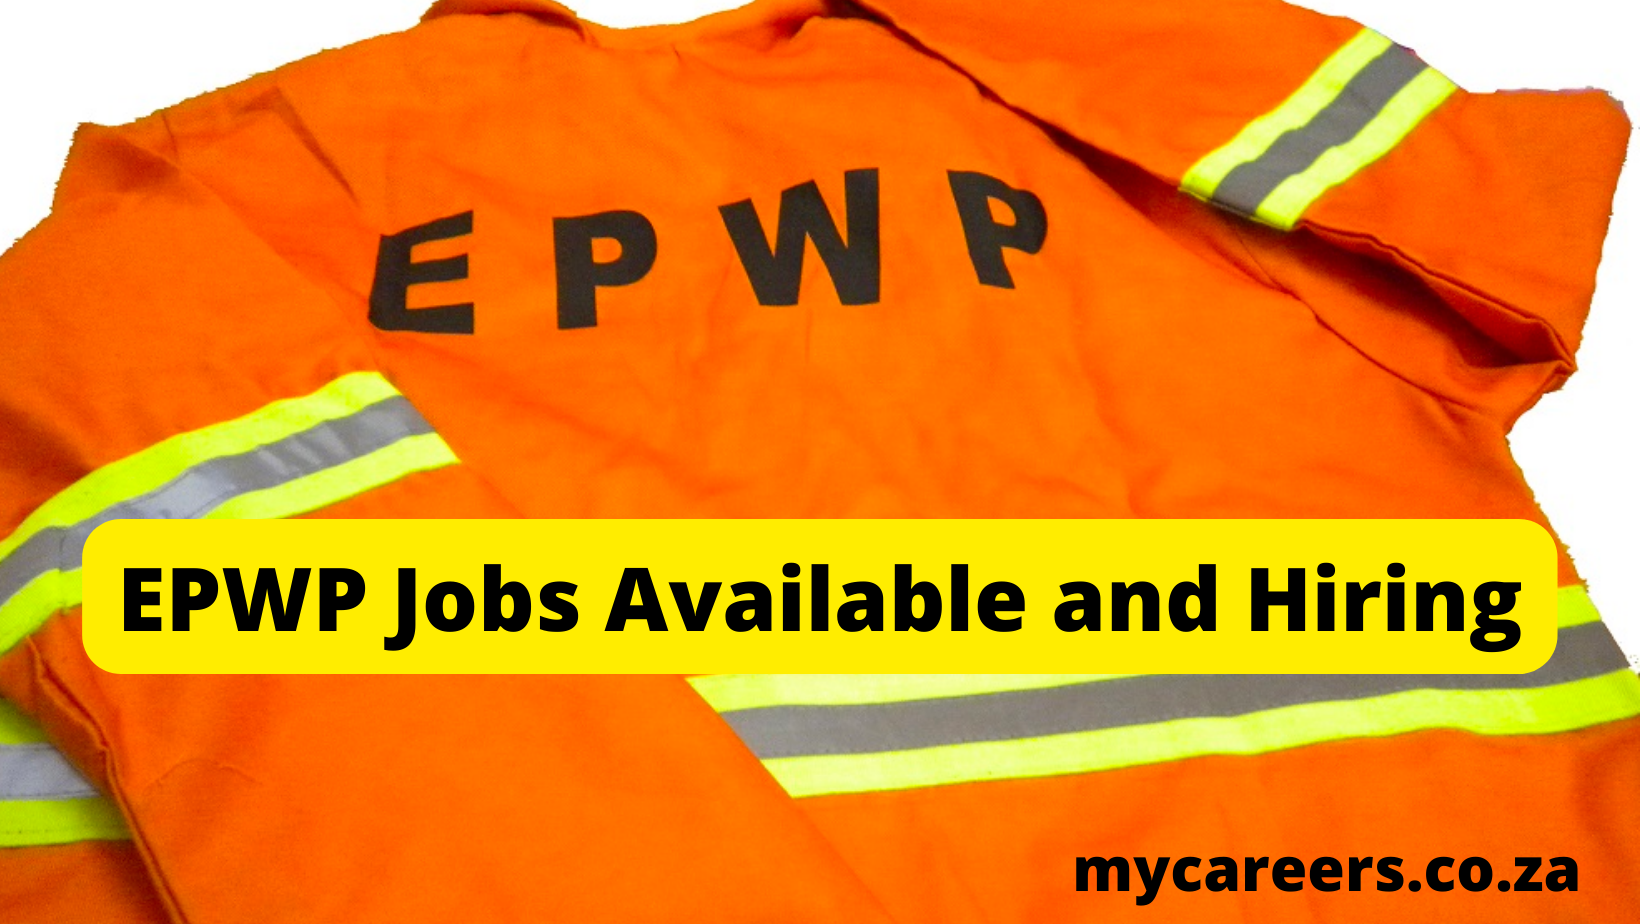 Epwp jobs Hiring  and  Epwp vacancies Hiring Now